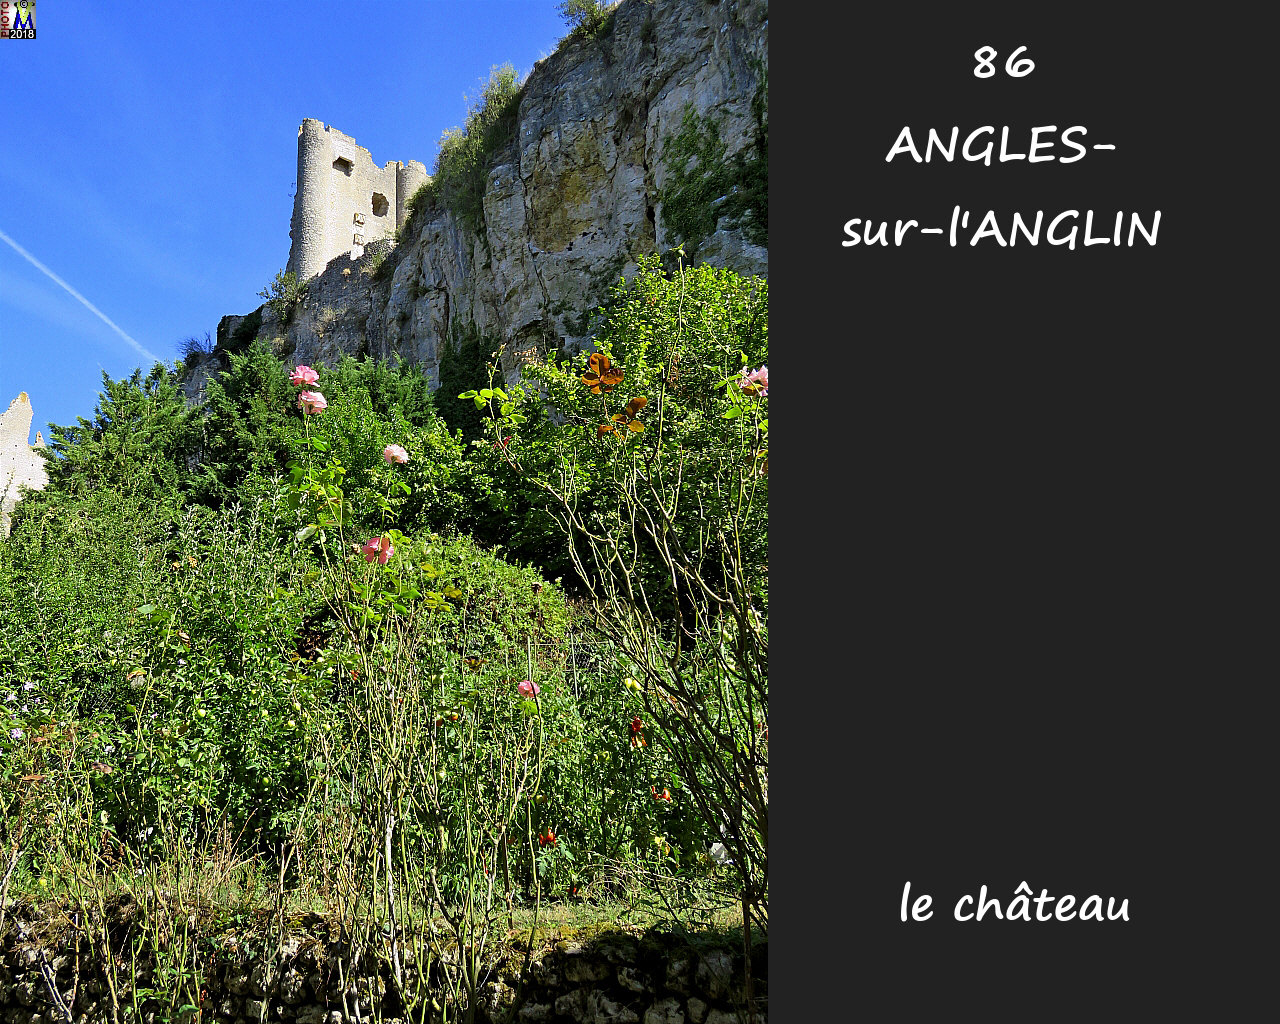 86ANGLES-S-ANGLIN_chateau_1026.jpg